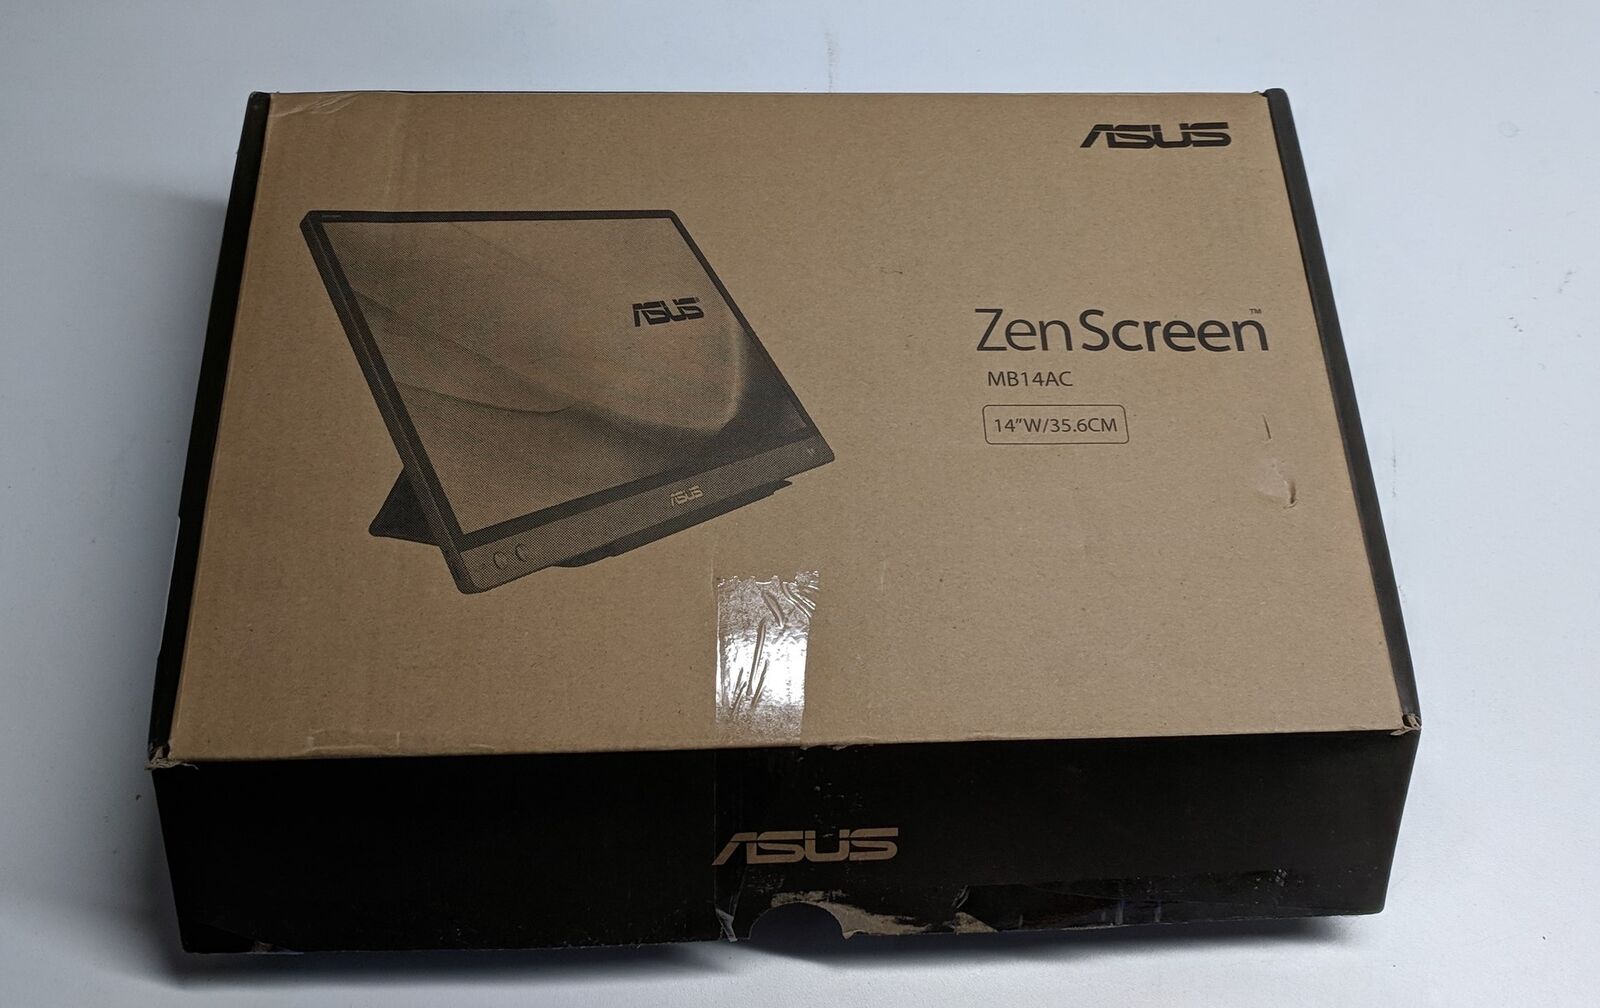 ASUS ZenScreen MB14AC LED FULL HD Portable Monitor